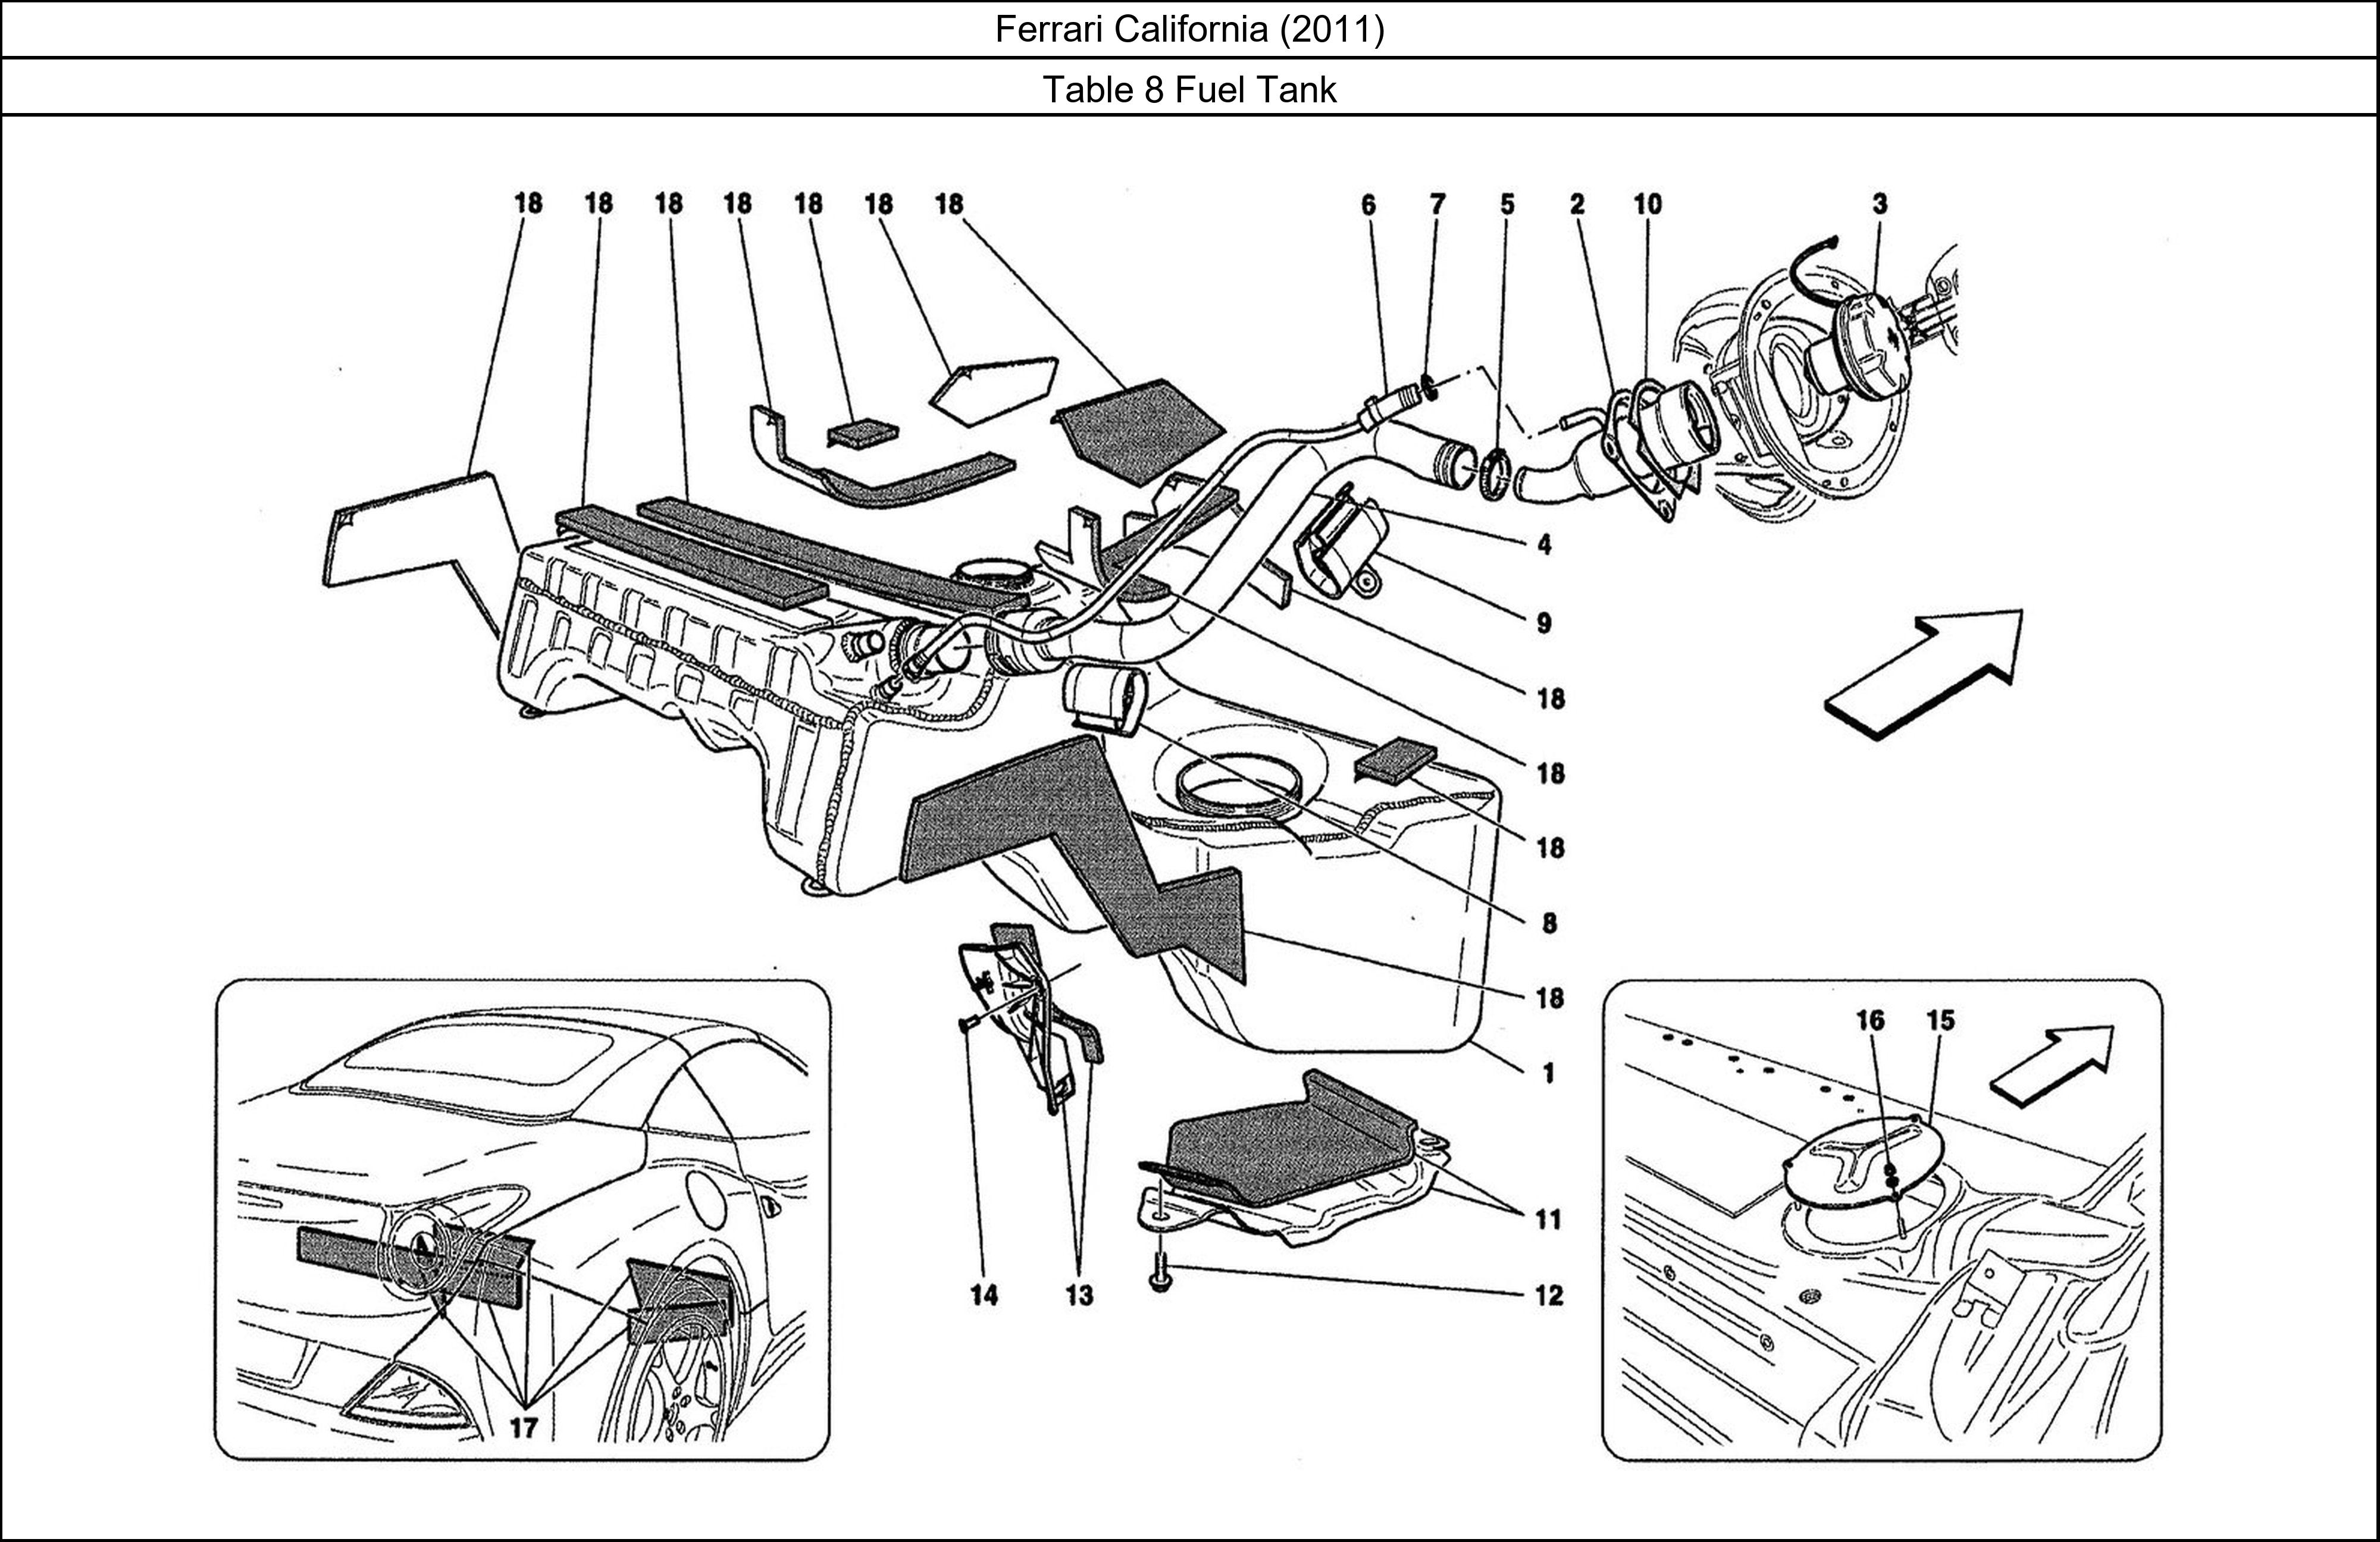 Ferrari Parts Ferrari California (2011) Table 8 Fuel Tank